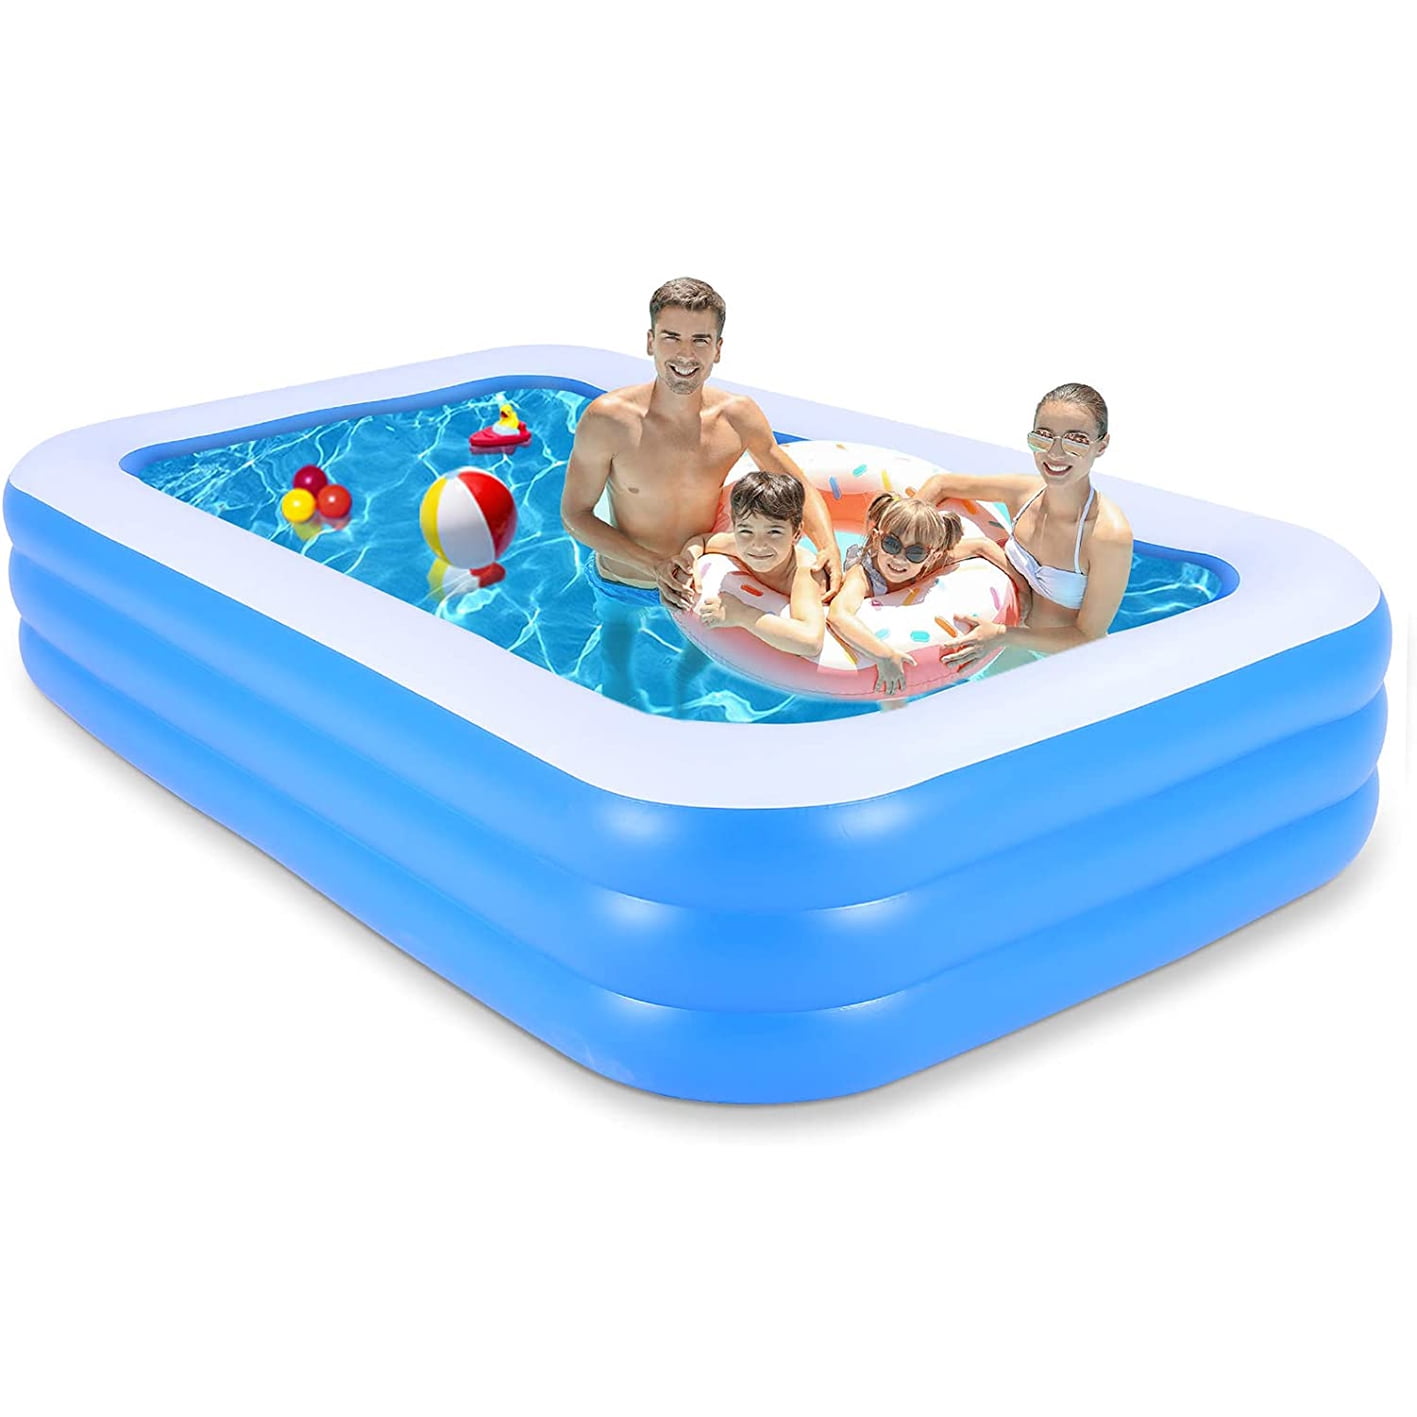 Intex Mandarin Swim Center Family Inflatable Above Ground Pool 90” x 58” x 18" 